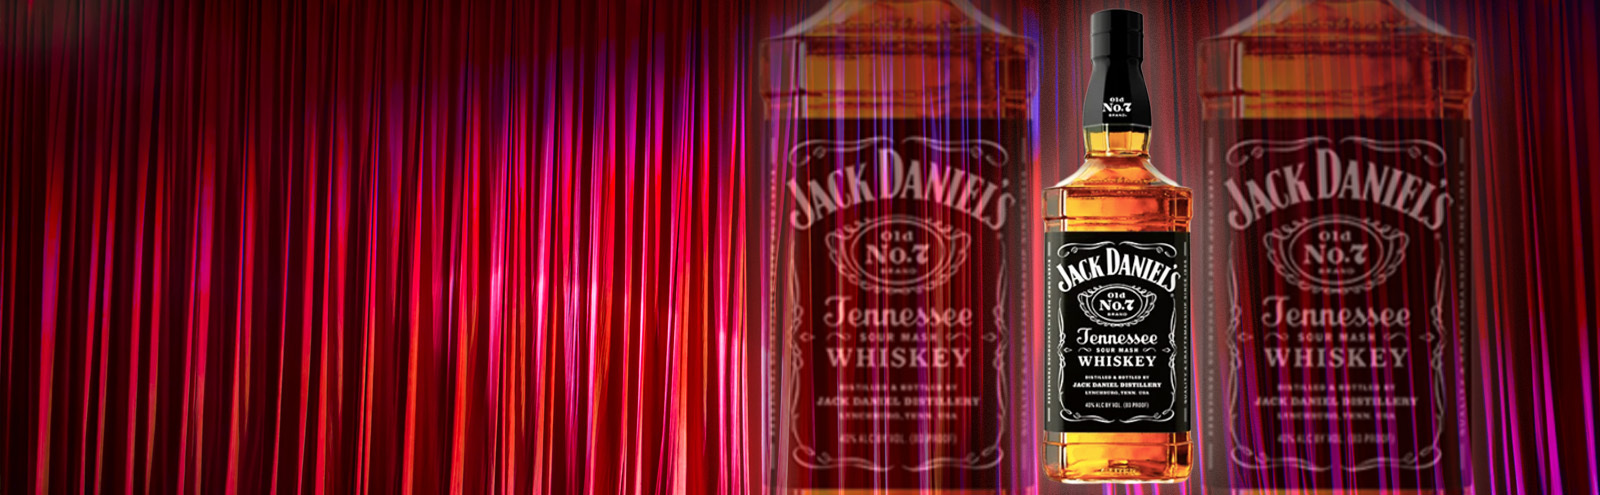 Jack Daniel's Whiskey Review